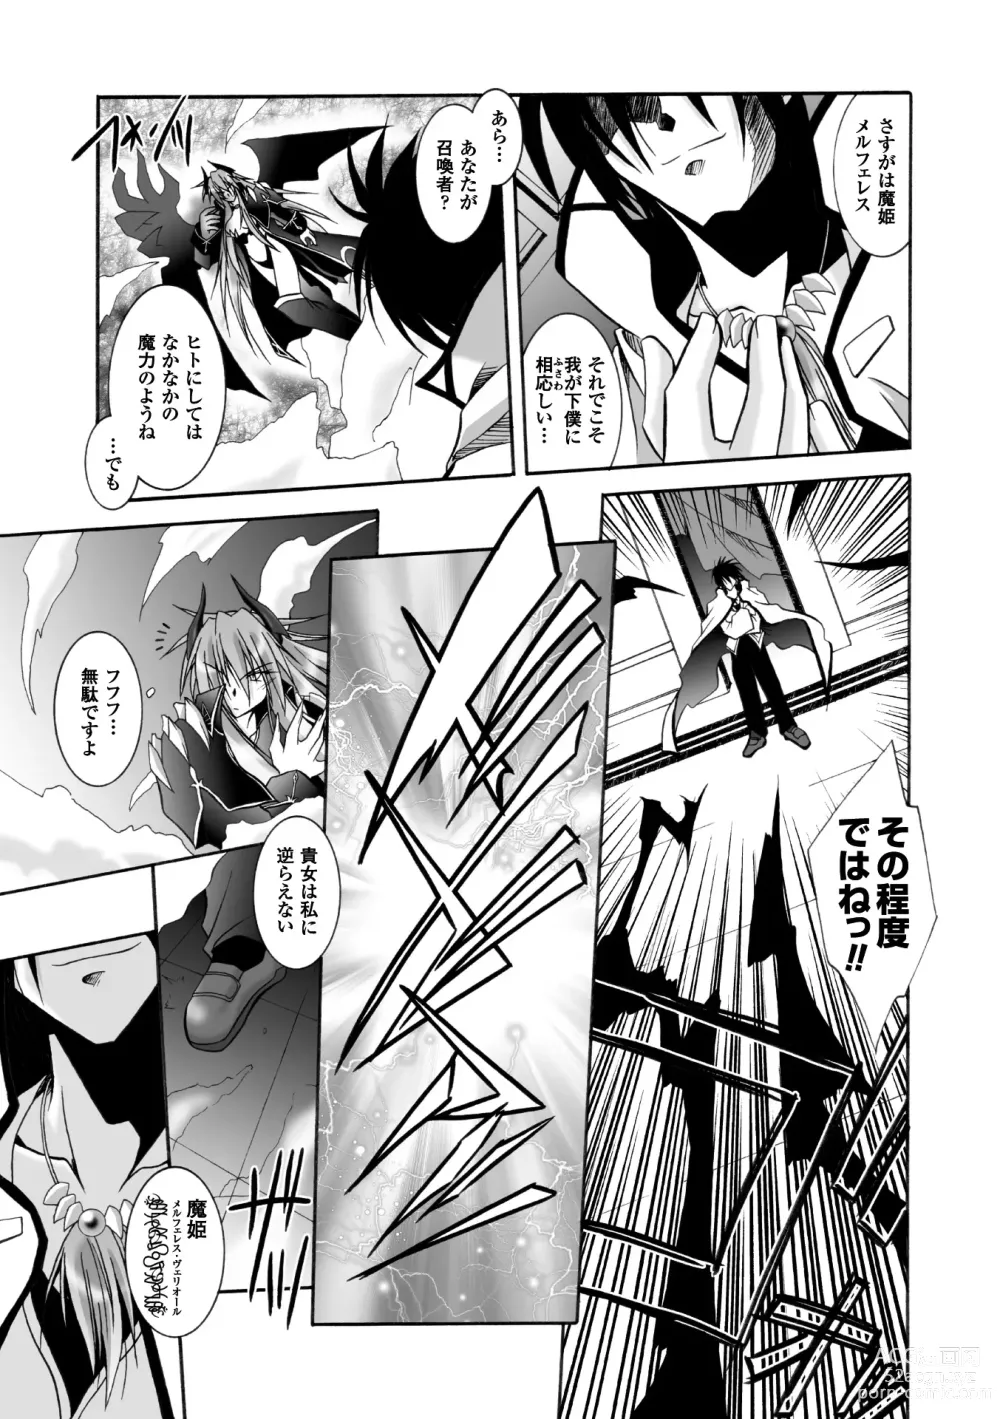 Page 9 of manga Datenshi-tachi no Chinkonka - Fallen Angels Requiem